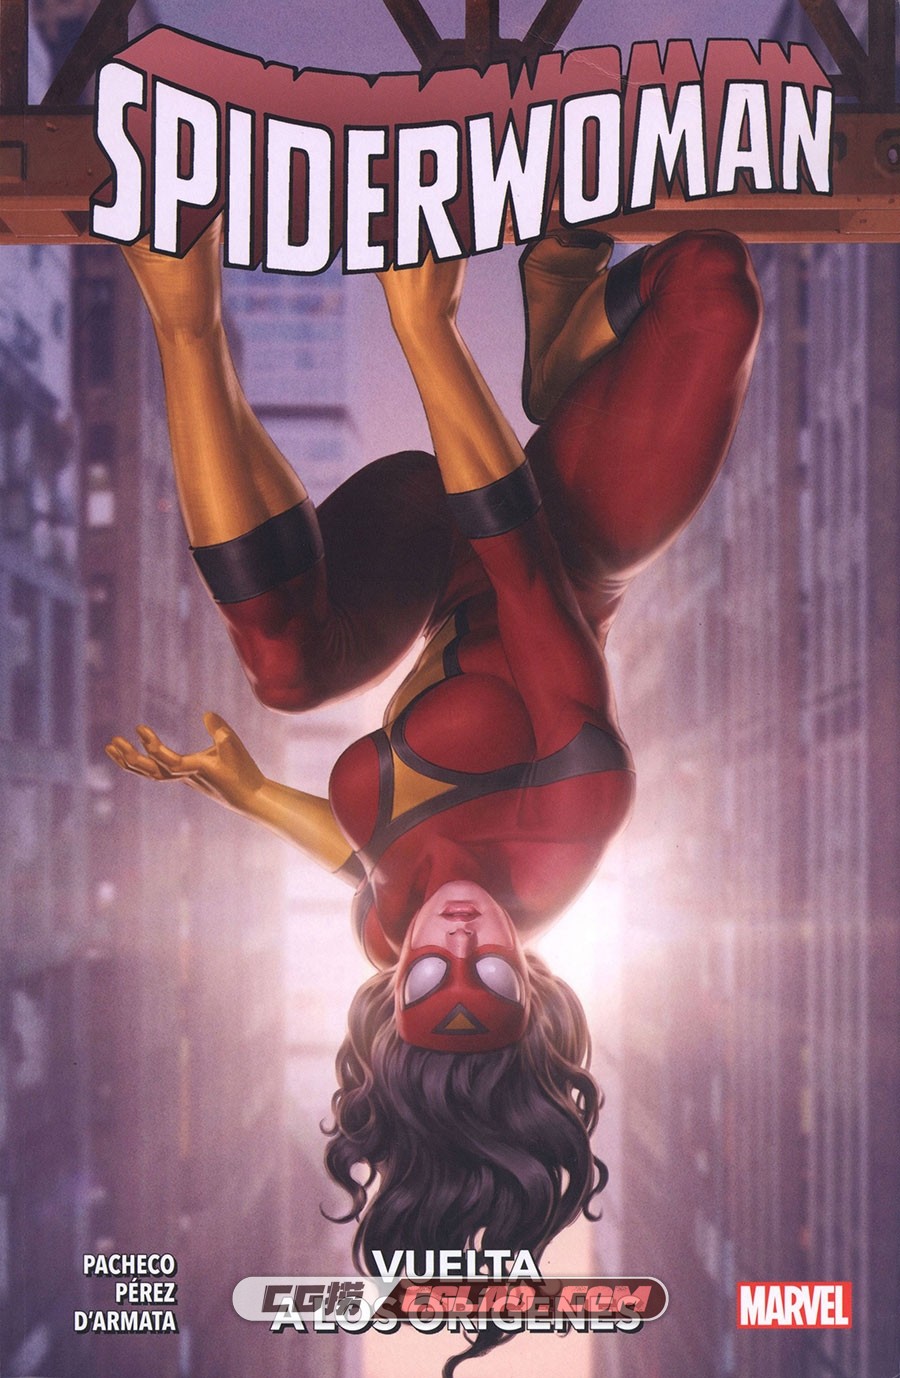 Spiderwoman 第03册 Vuelta a los Orígenes 漫画 百度网盘下载,0001.jpg